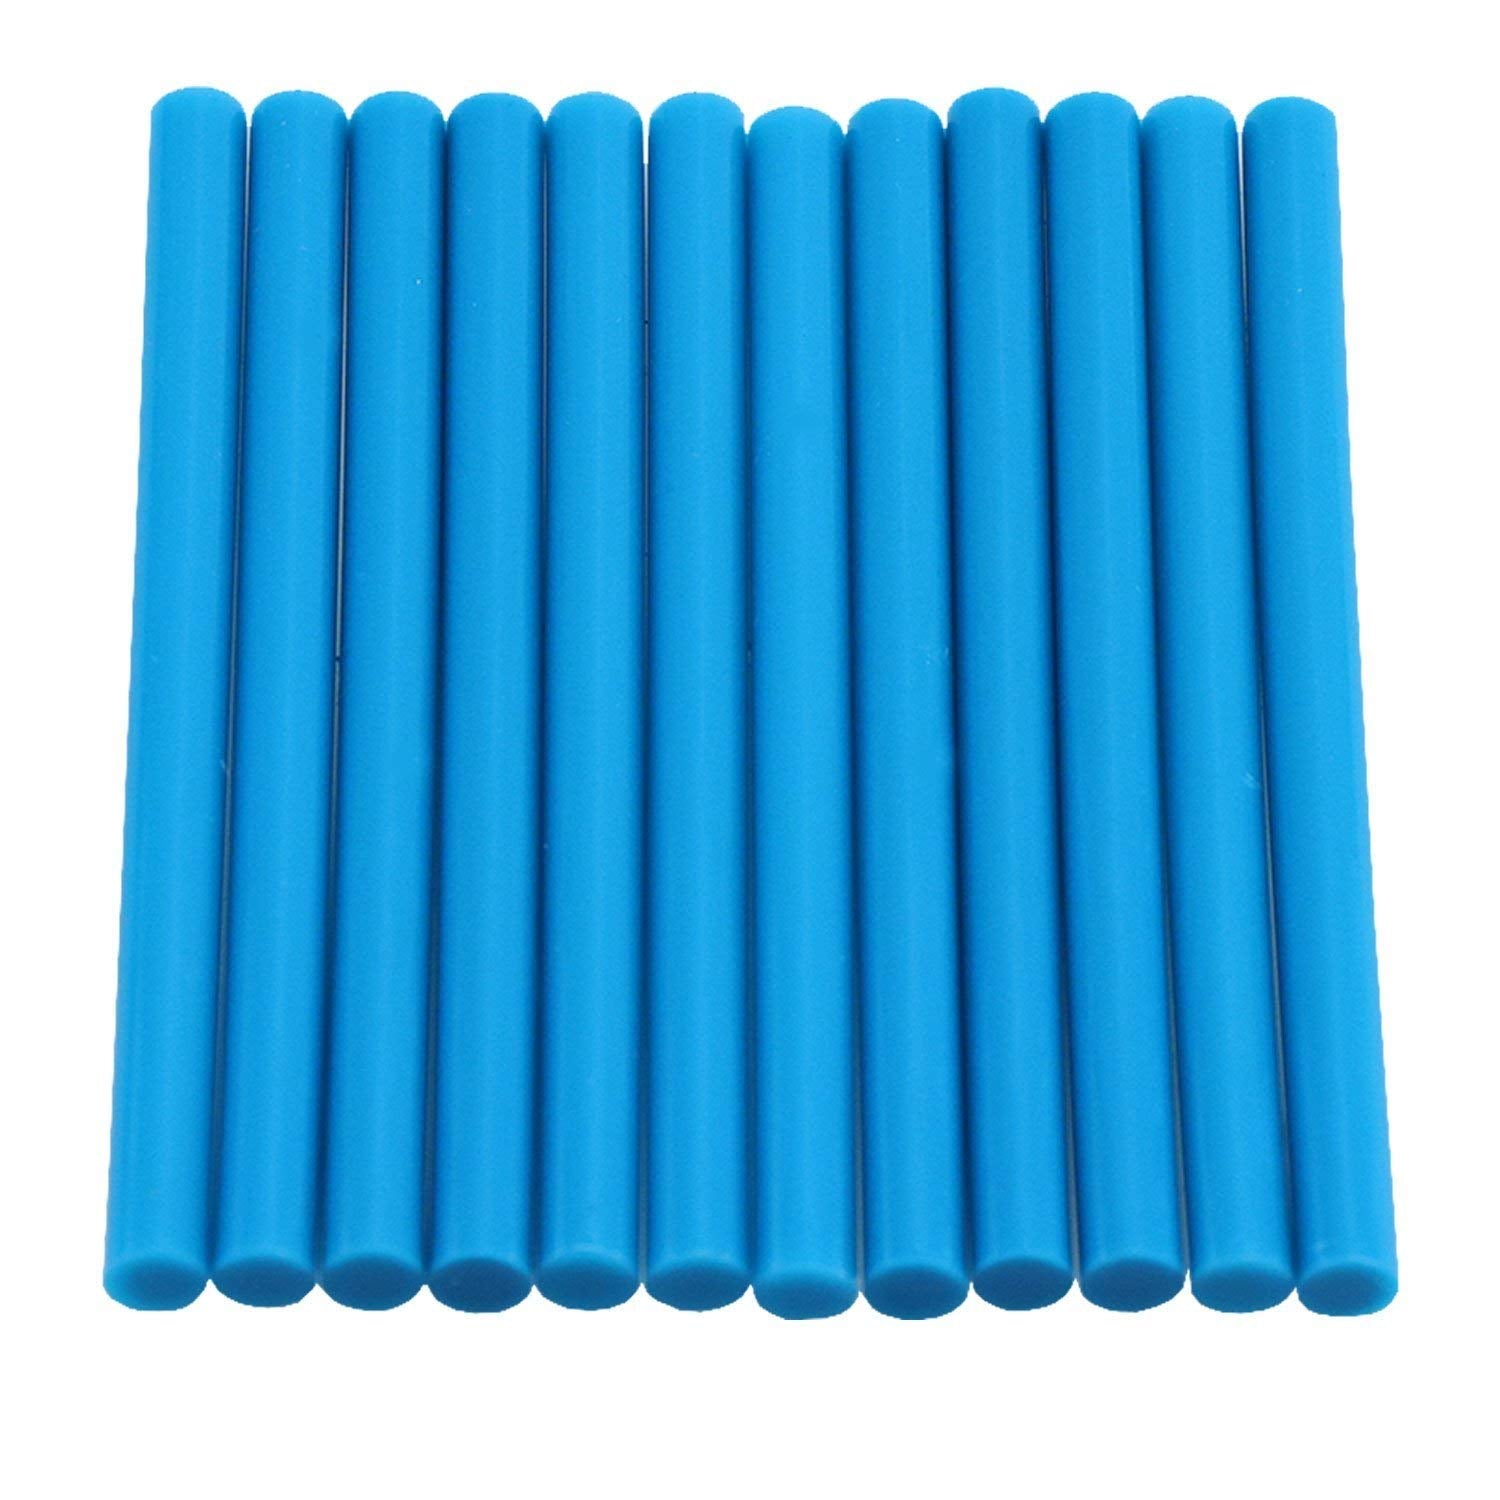 Light Blue Hot Glue Sticks Mini Size - 4 - 12 Pack – Surebonder